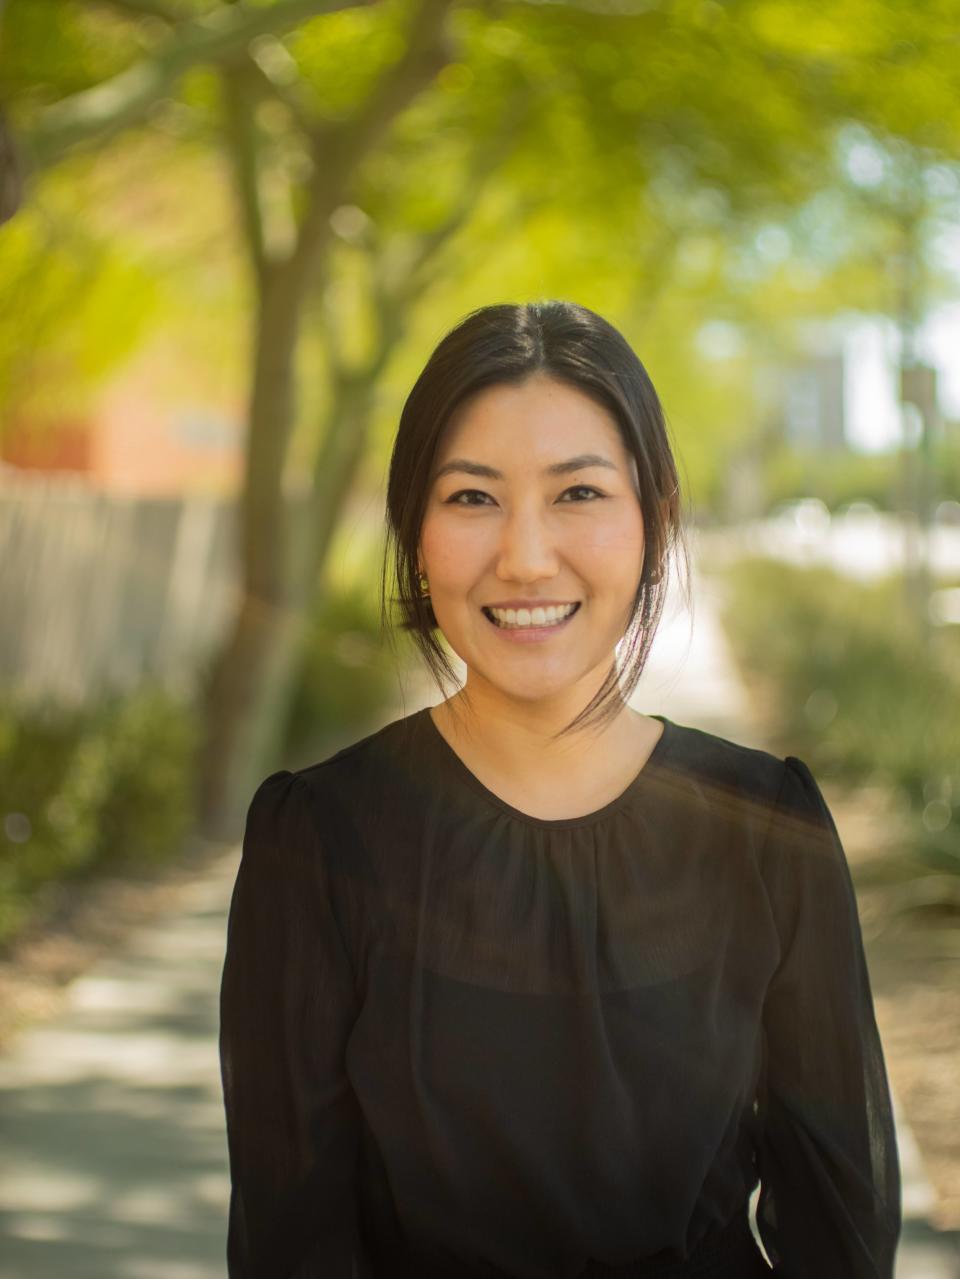 Joanna Kim is an assistant professor of psychology at Arizona State University.